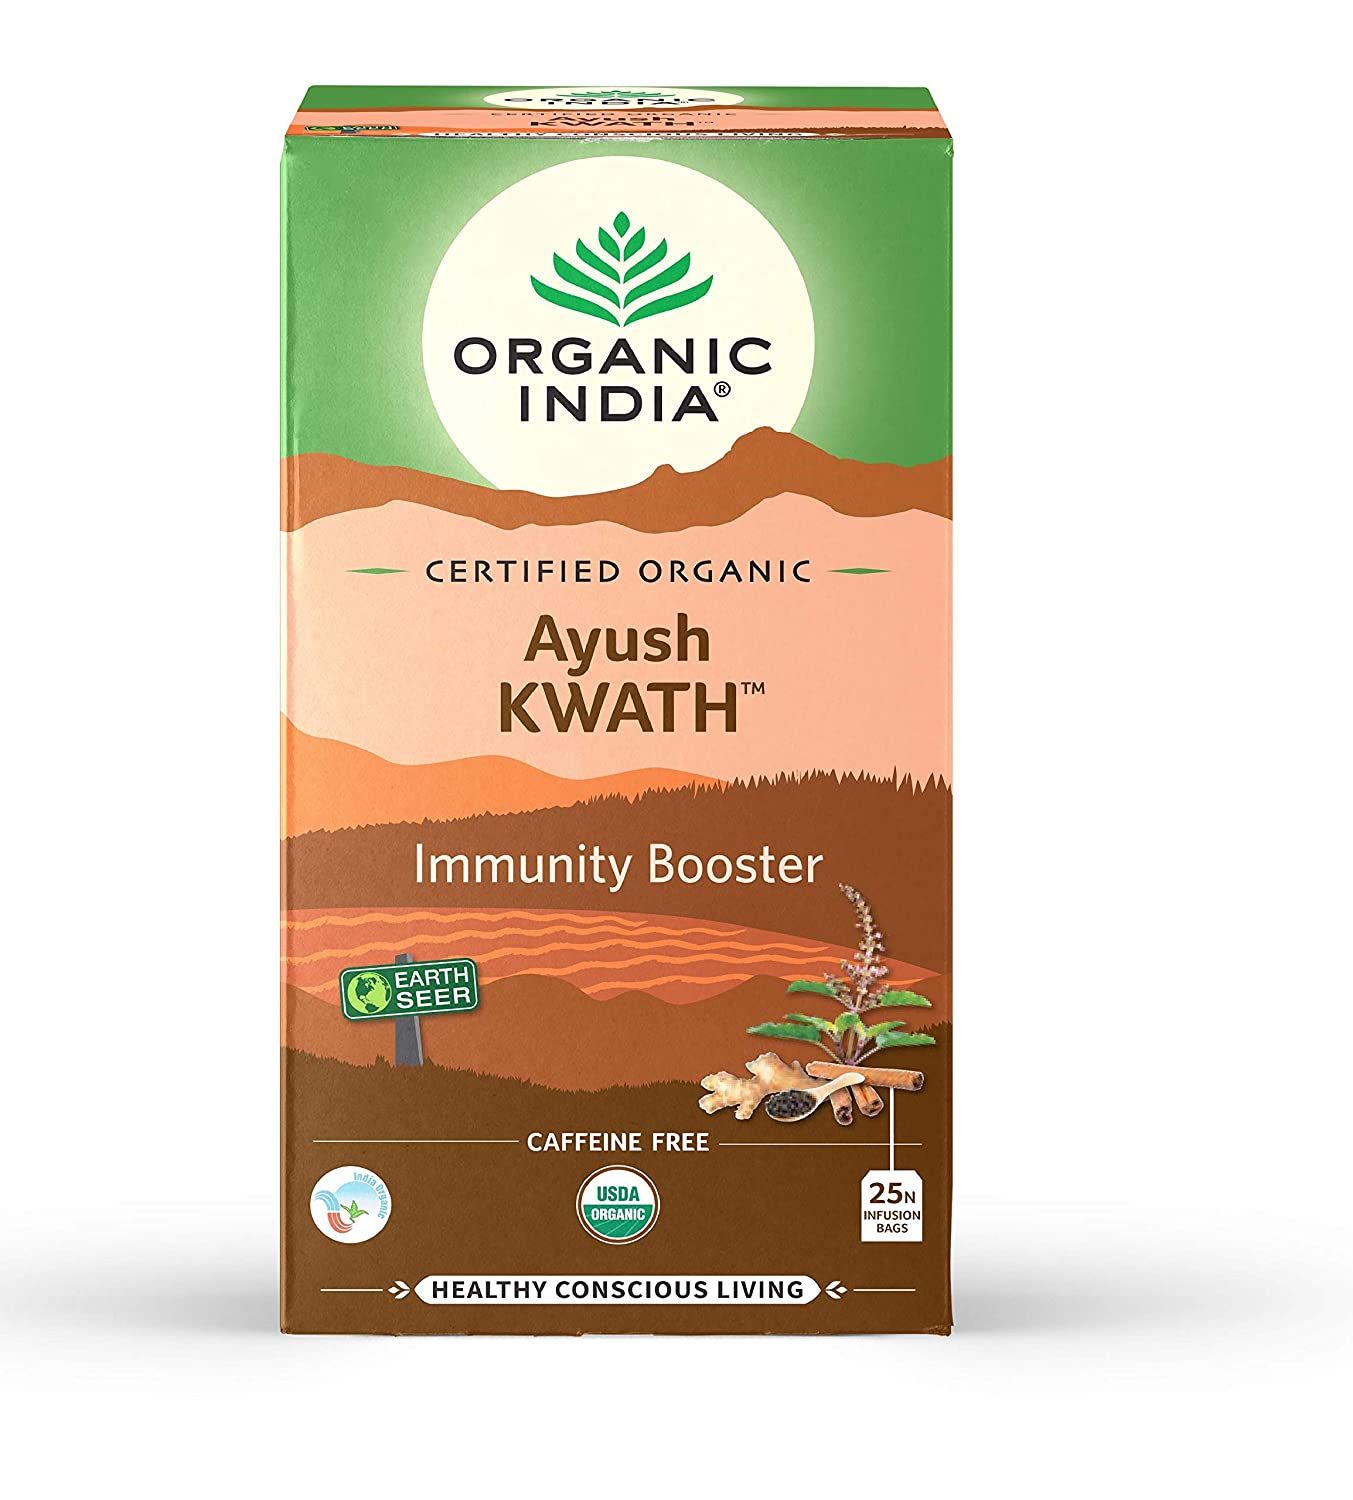 Organic India Ayush Kwath Tea Bags Image